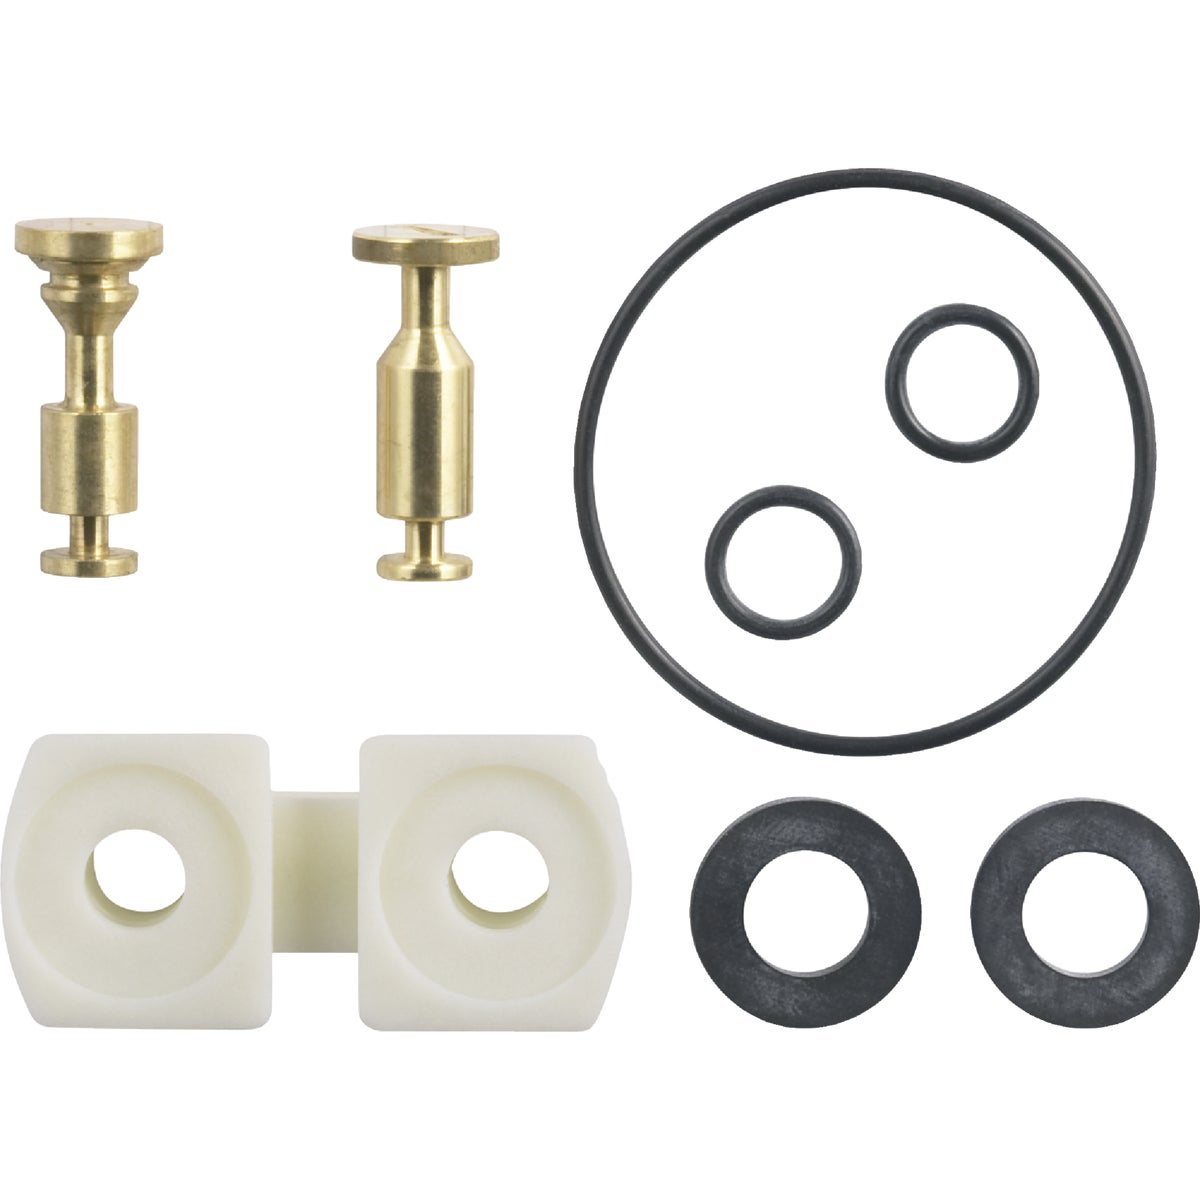 Item 450522, Kohler valve repair kit for older style Rite-temp valves.<br>
<br><b>No. GP78579:</b>